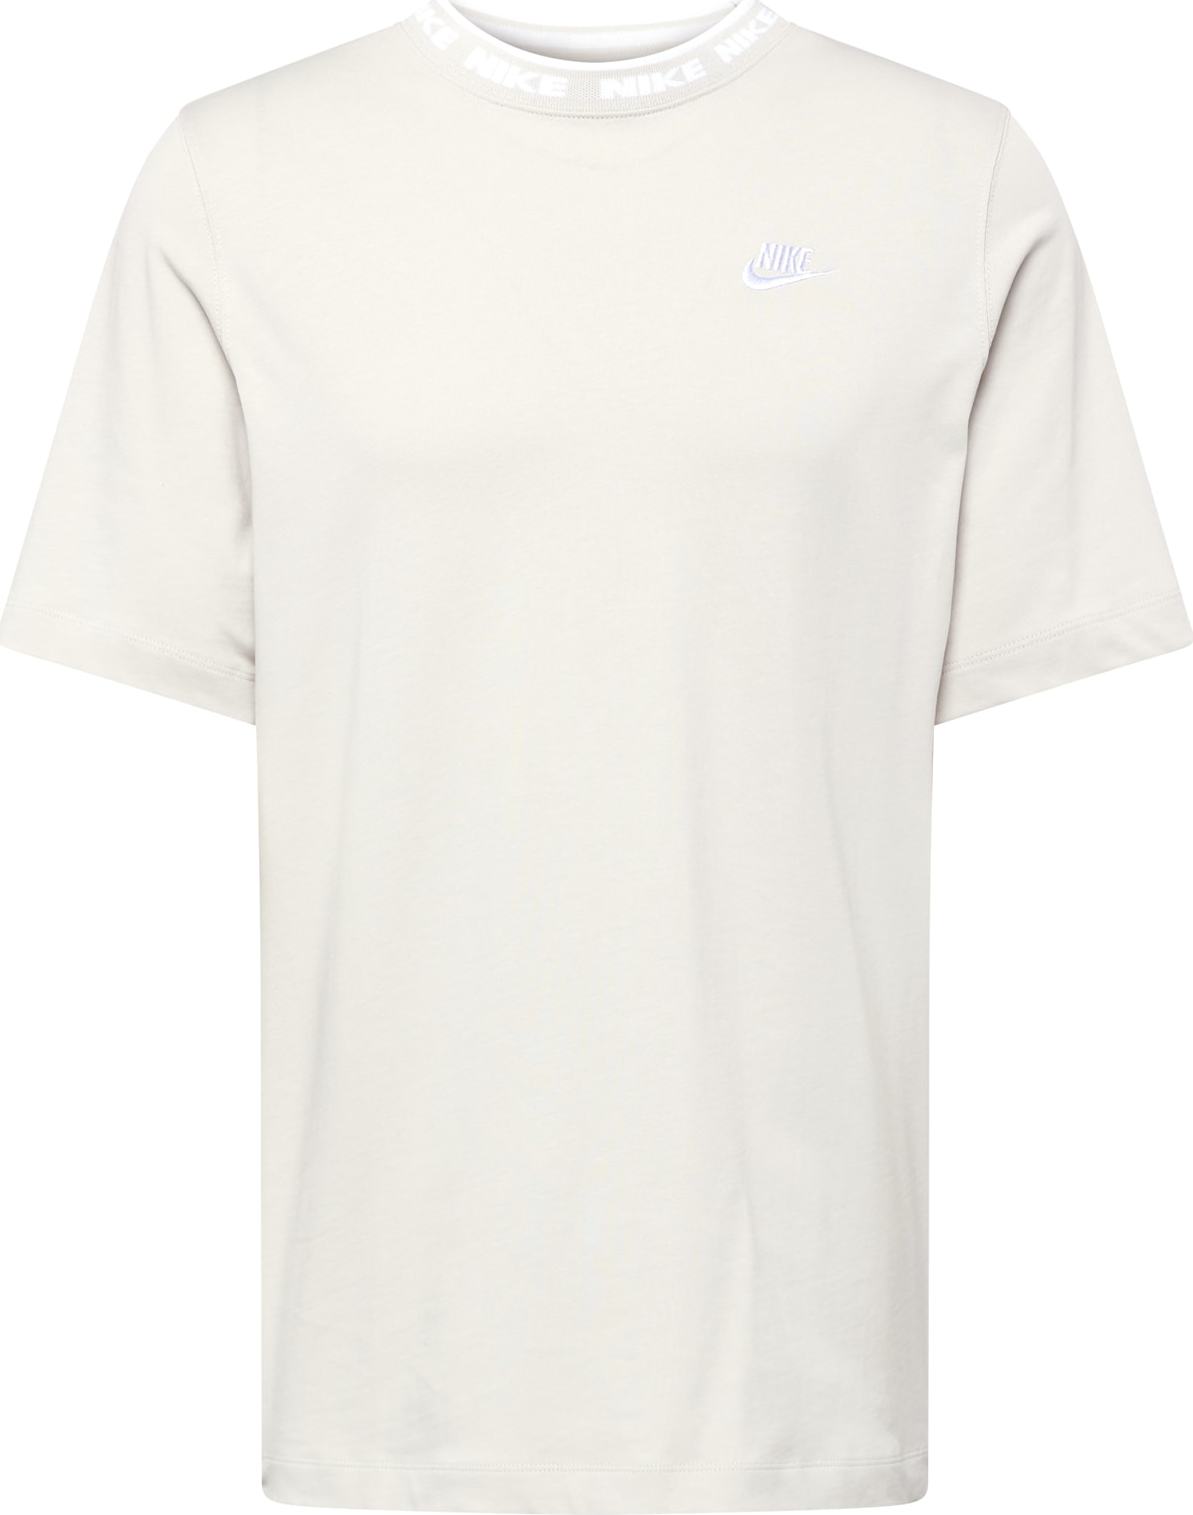 Tričko Nike Sportswear béžová / bílá